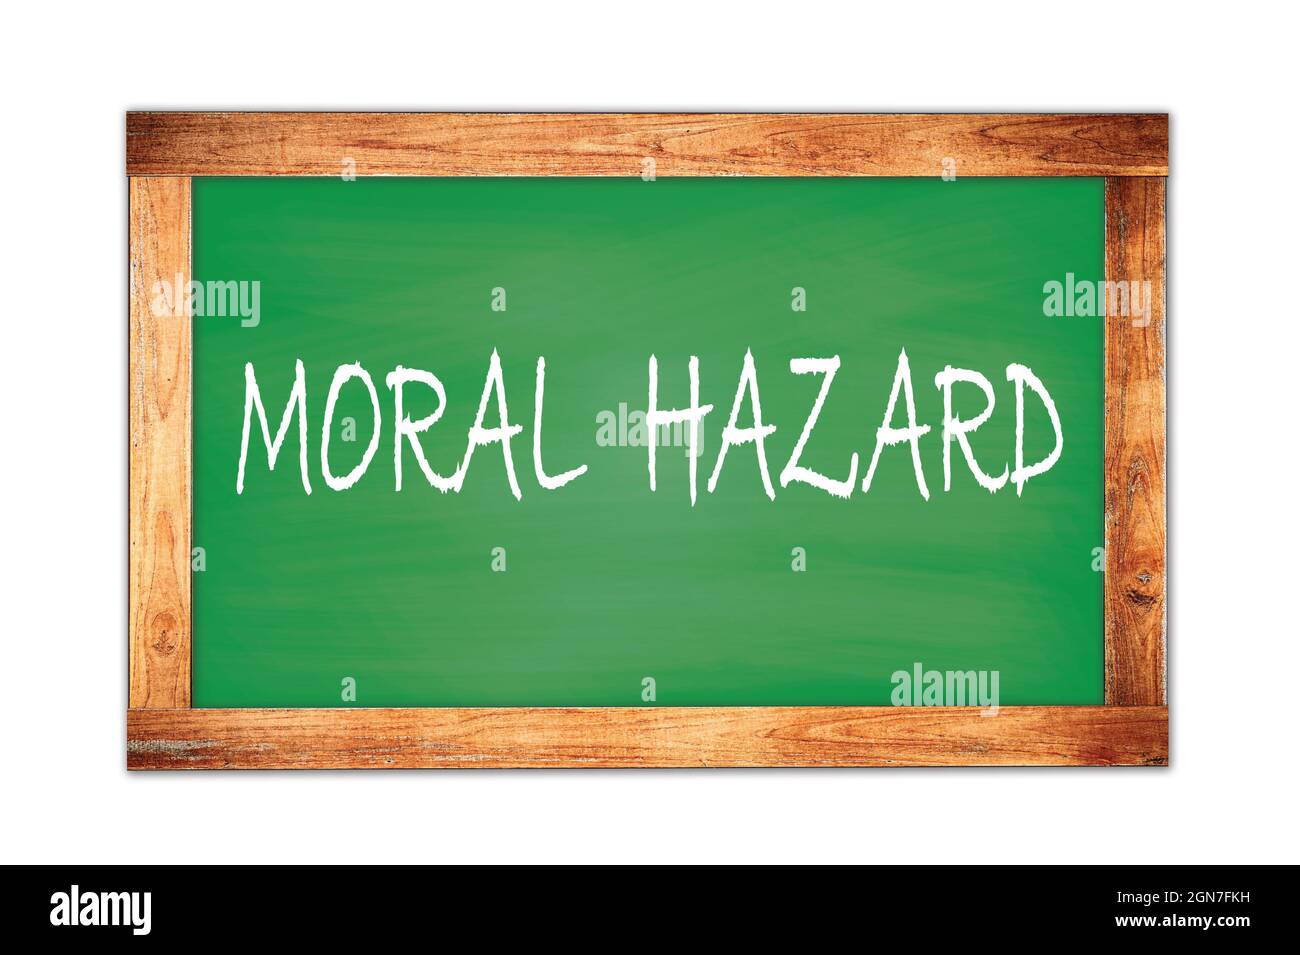 MORAL  HAZARD text written on green wooden frame school blackboard. Stock Photo